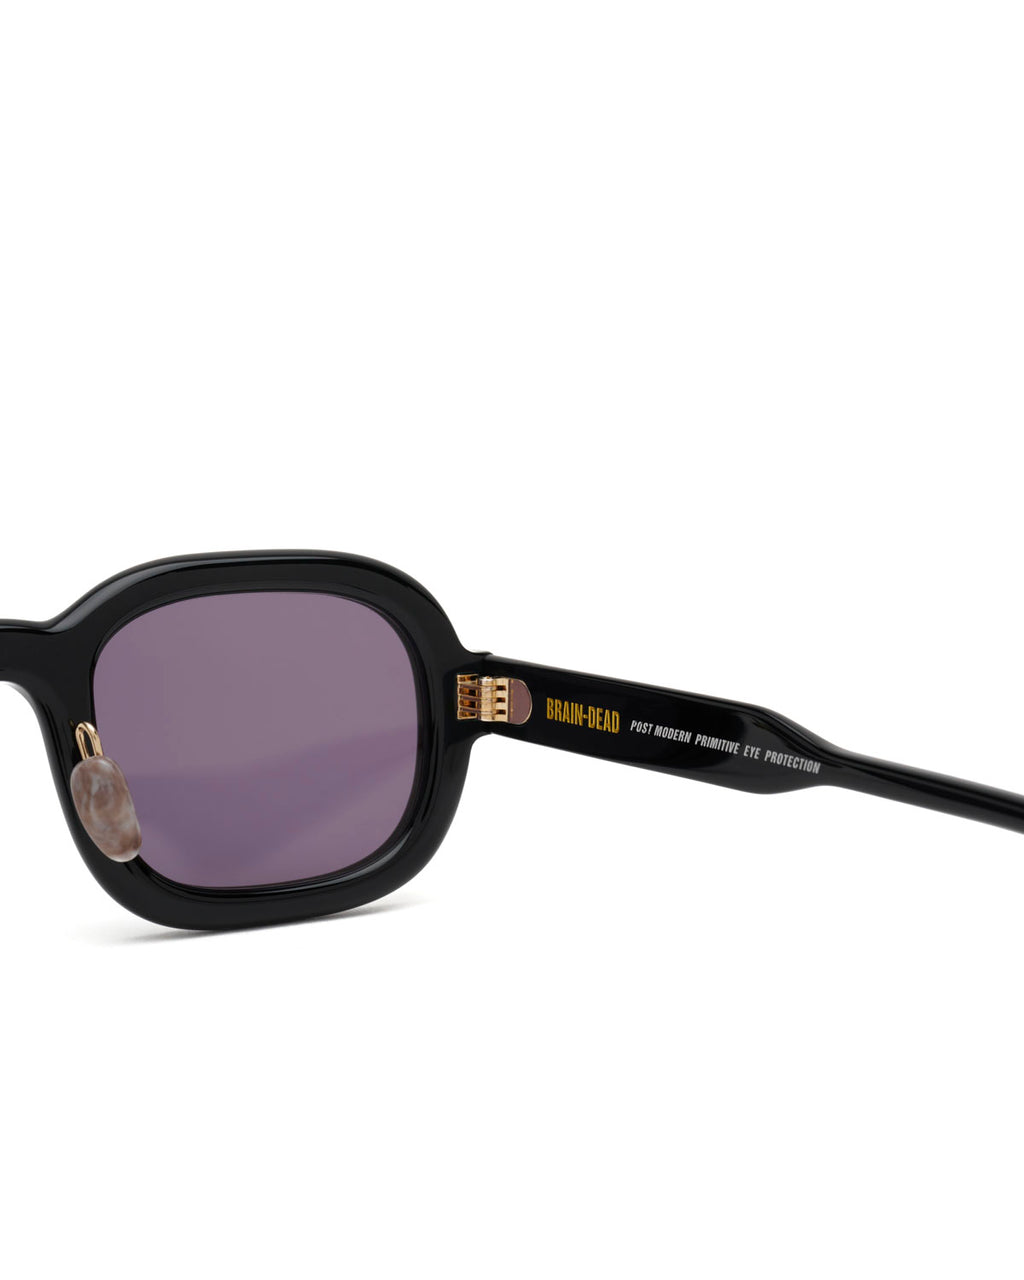 Newman Sunglasses, Black